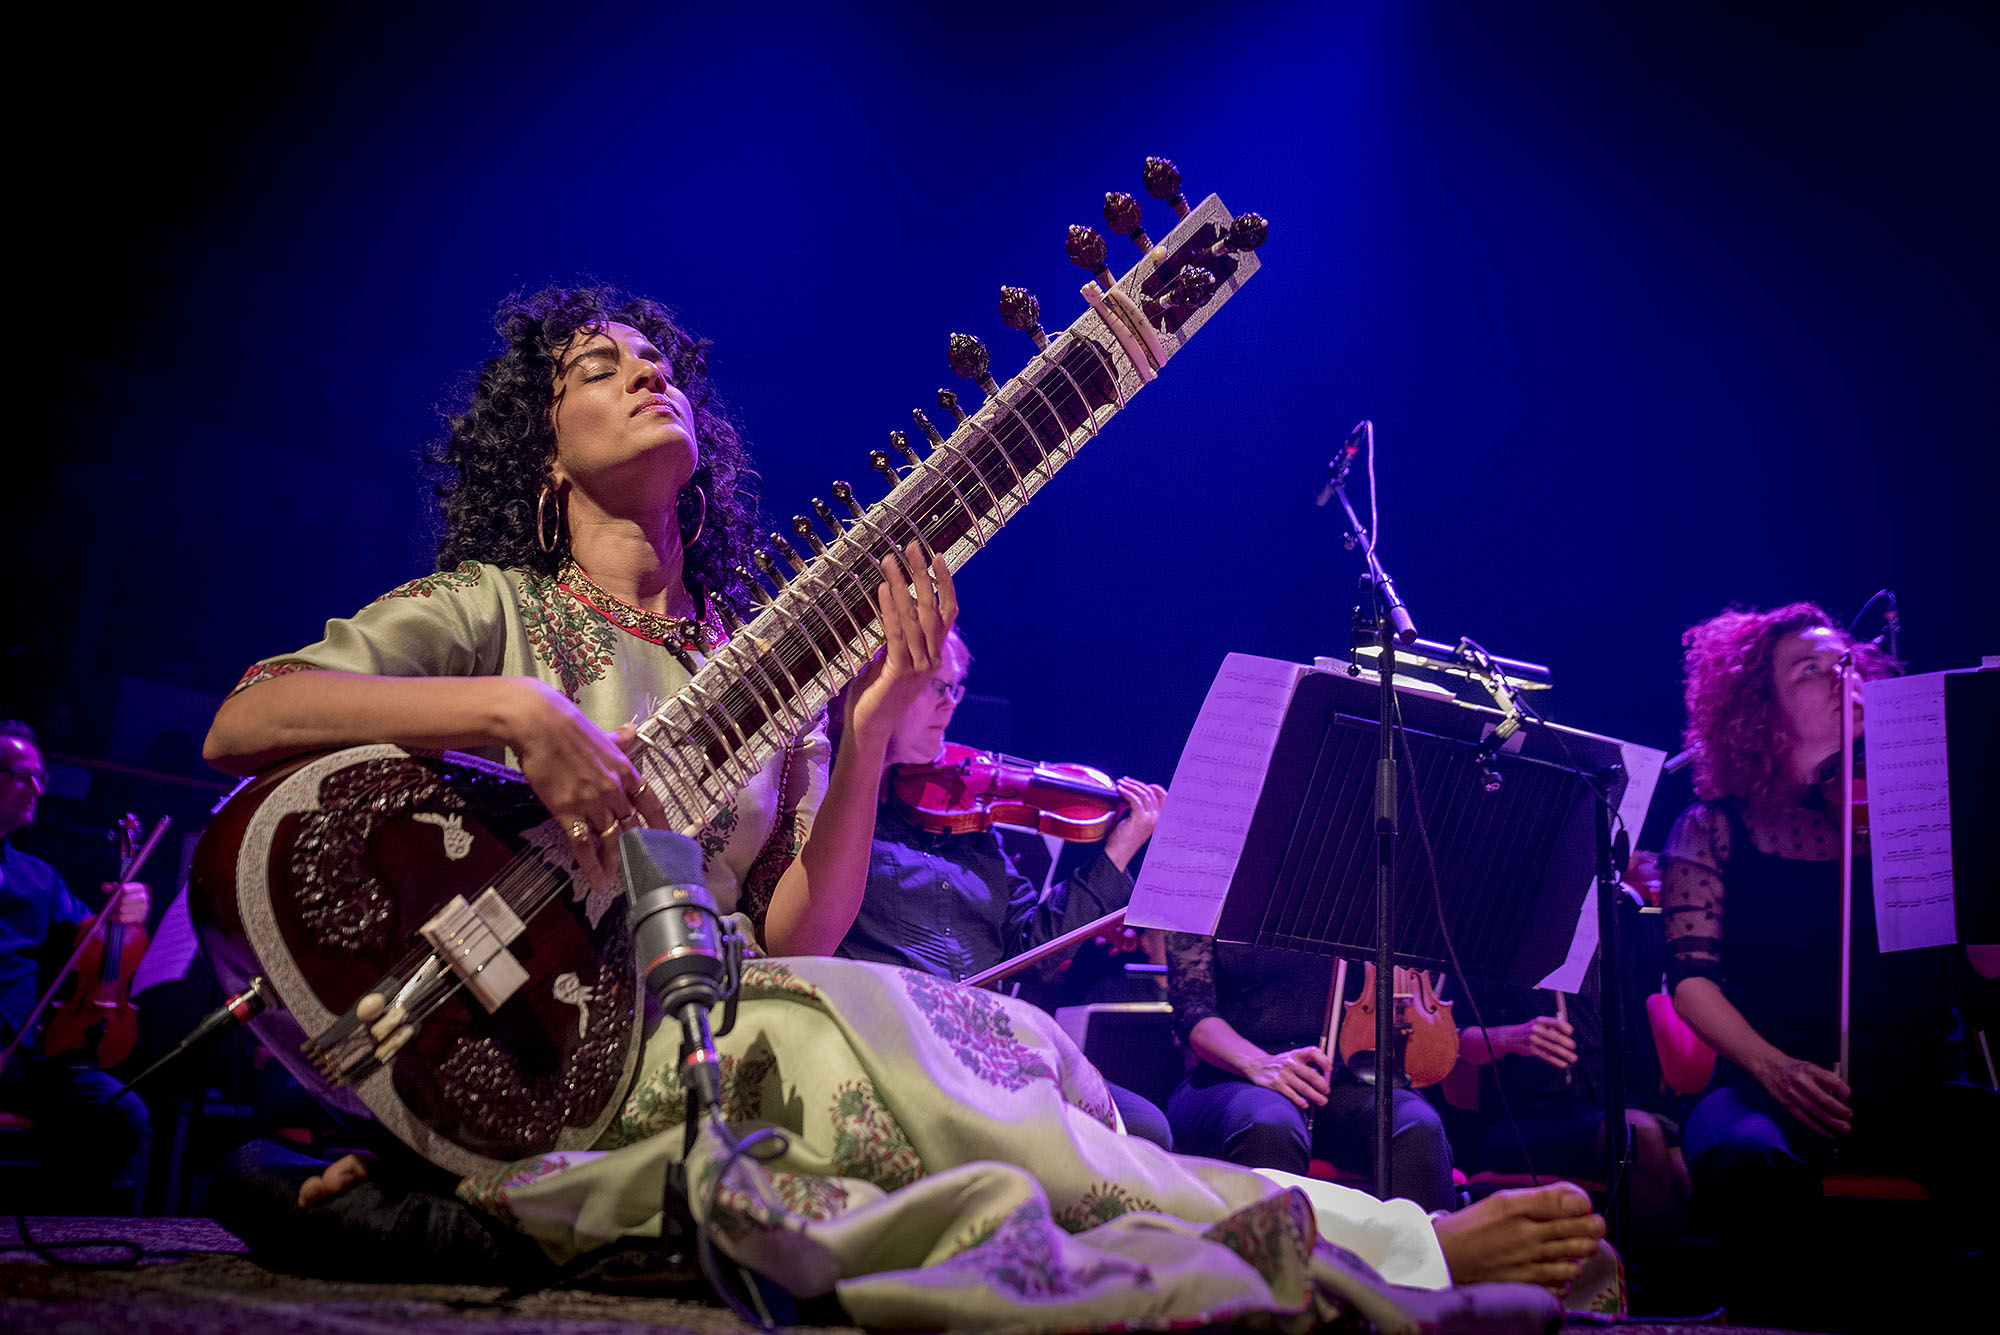 Watch: Anoushka Shankar & Manu Delago with Metropole Orkest Strings live at LGW18